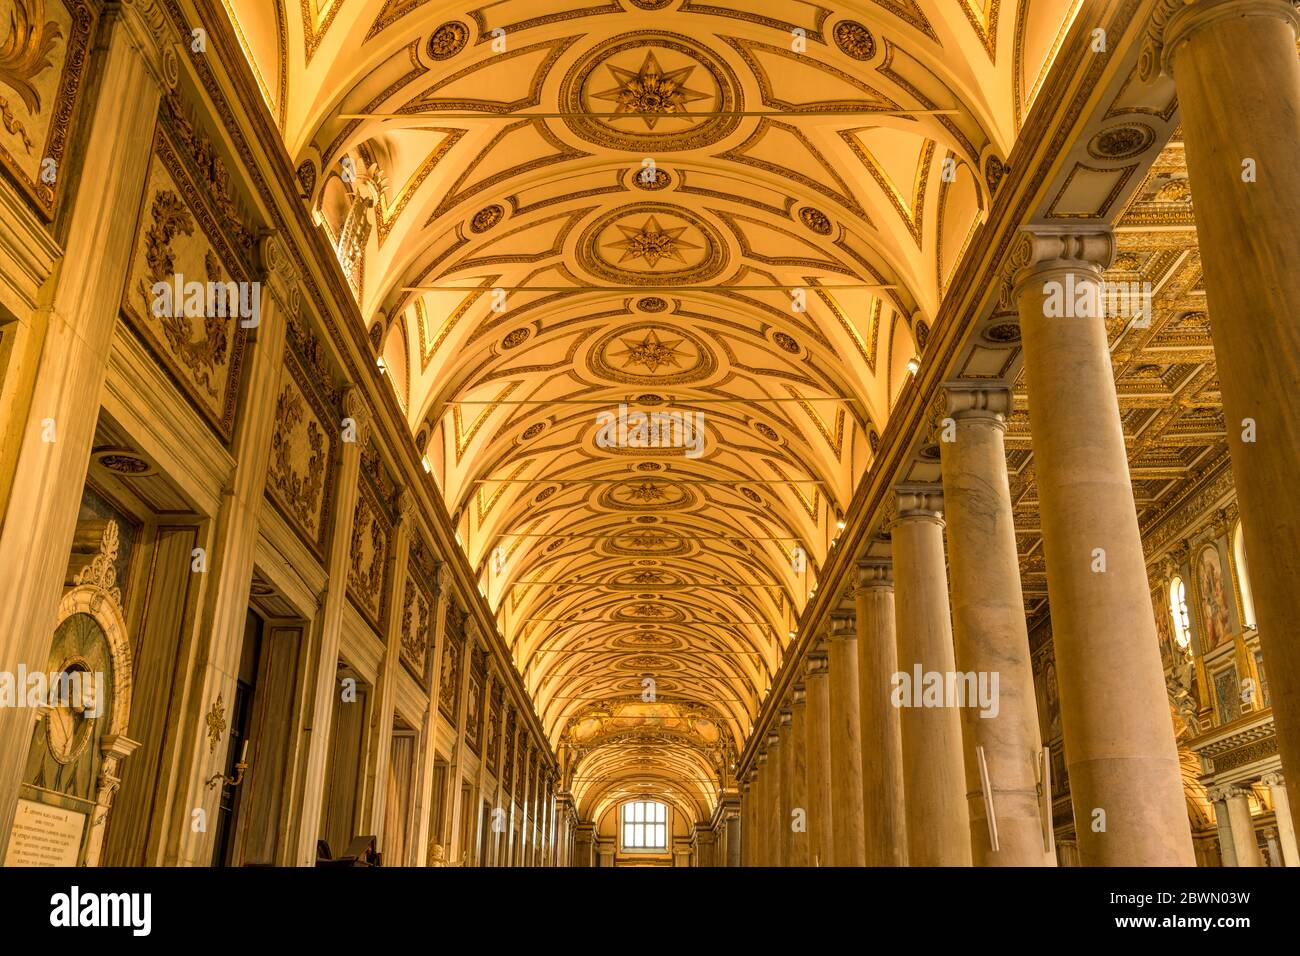 Plafond de l'allée - UNE vue grand angle du plafond de l'arche de l'allée gauche à côté de la nef dans la basilique de Santa Maria Maggior. Rome, Italie. Banque D'Images